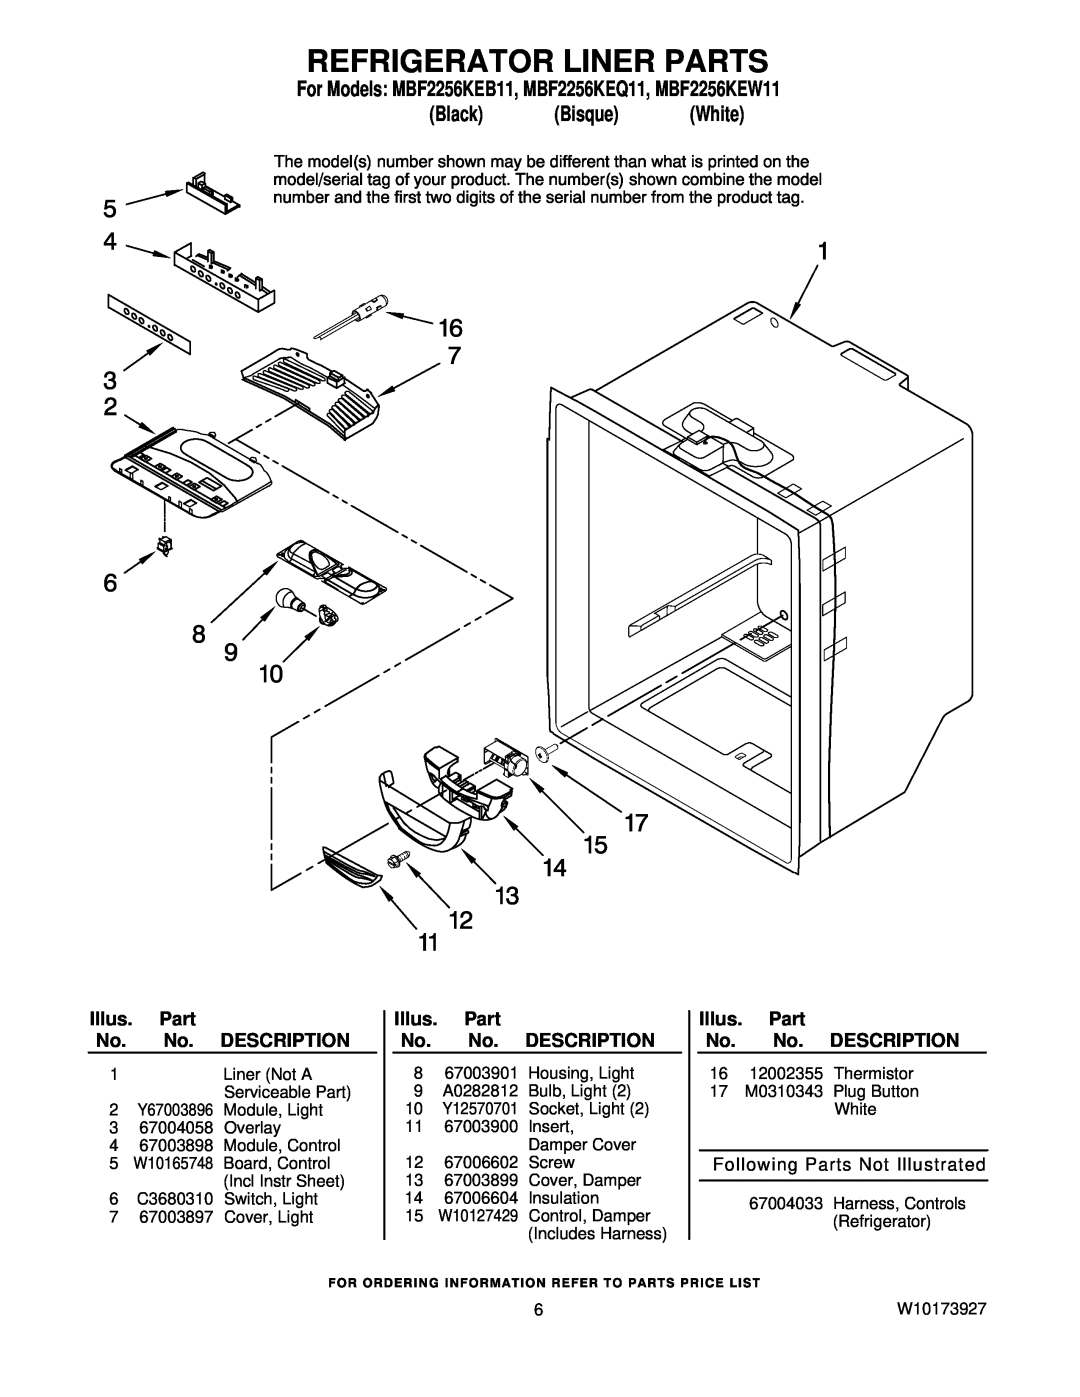 Maytag manual Refrigerator Liner Parts, For Models MBF2256KEB11, MBF2256KEQ11, MBF2256KEW11, Black Bisque White 